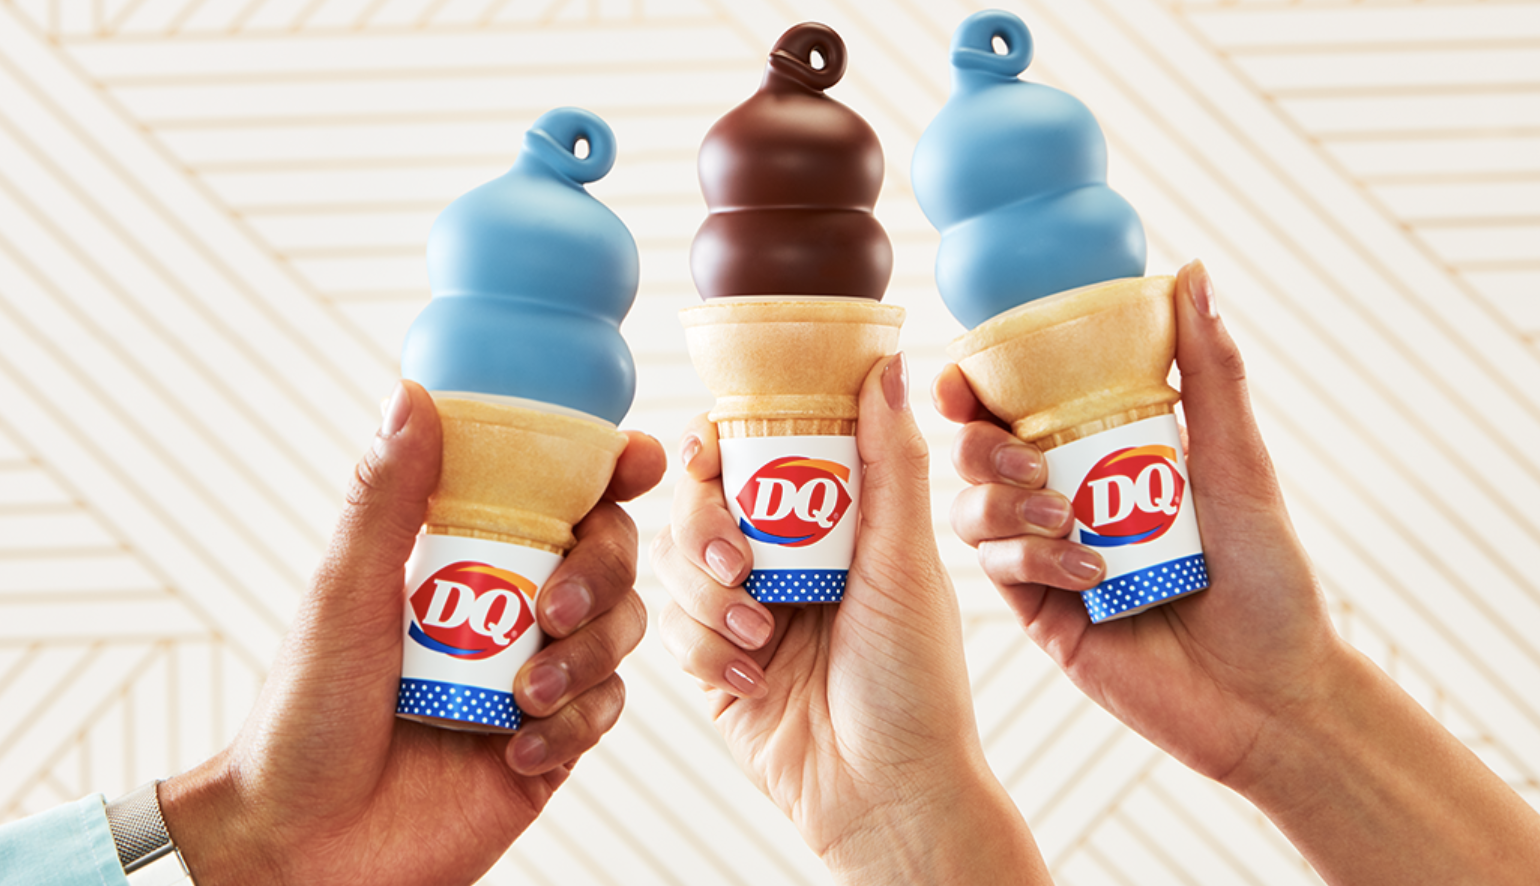 Dq Ice Cream Cones threadstips